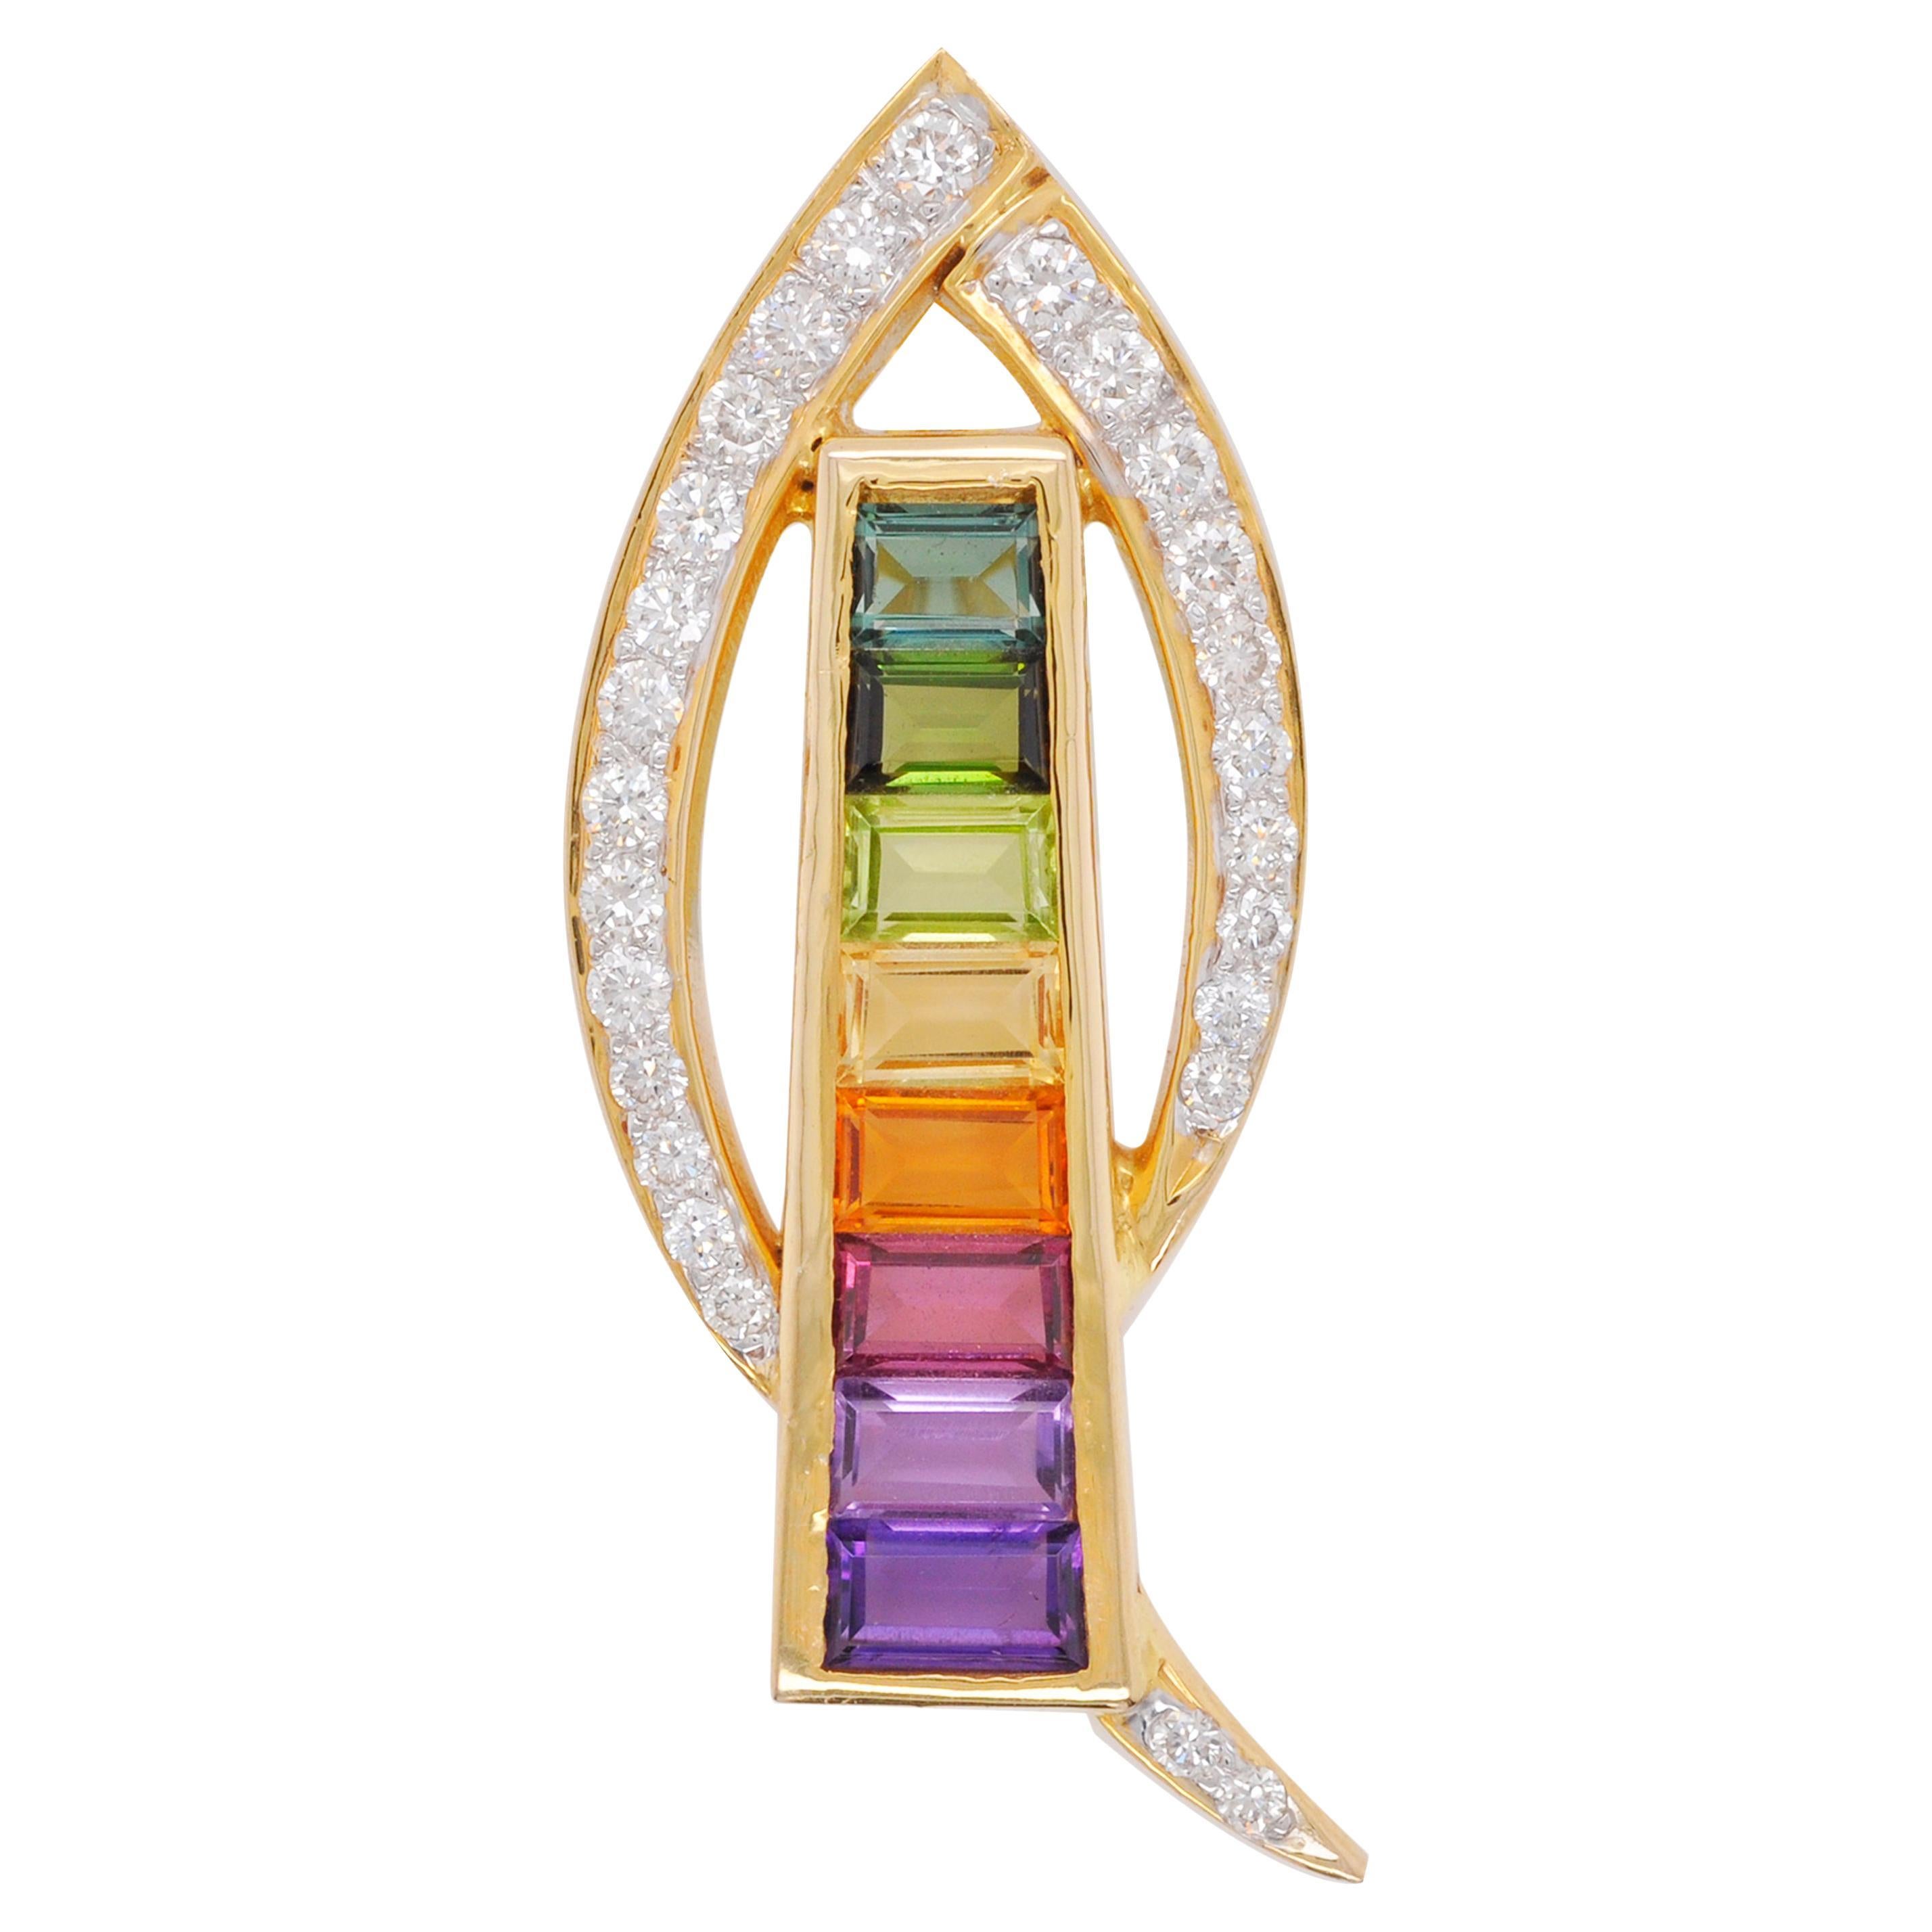 Collier pendentif contemporain en or 18 carats avec diamants et pierres précieuses multicolores en forme d'arc-en-ciel en vente